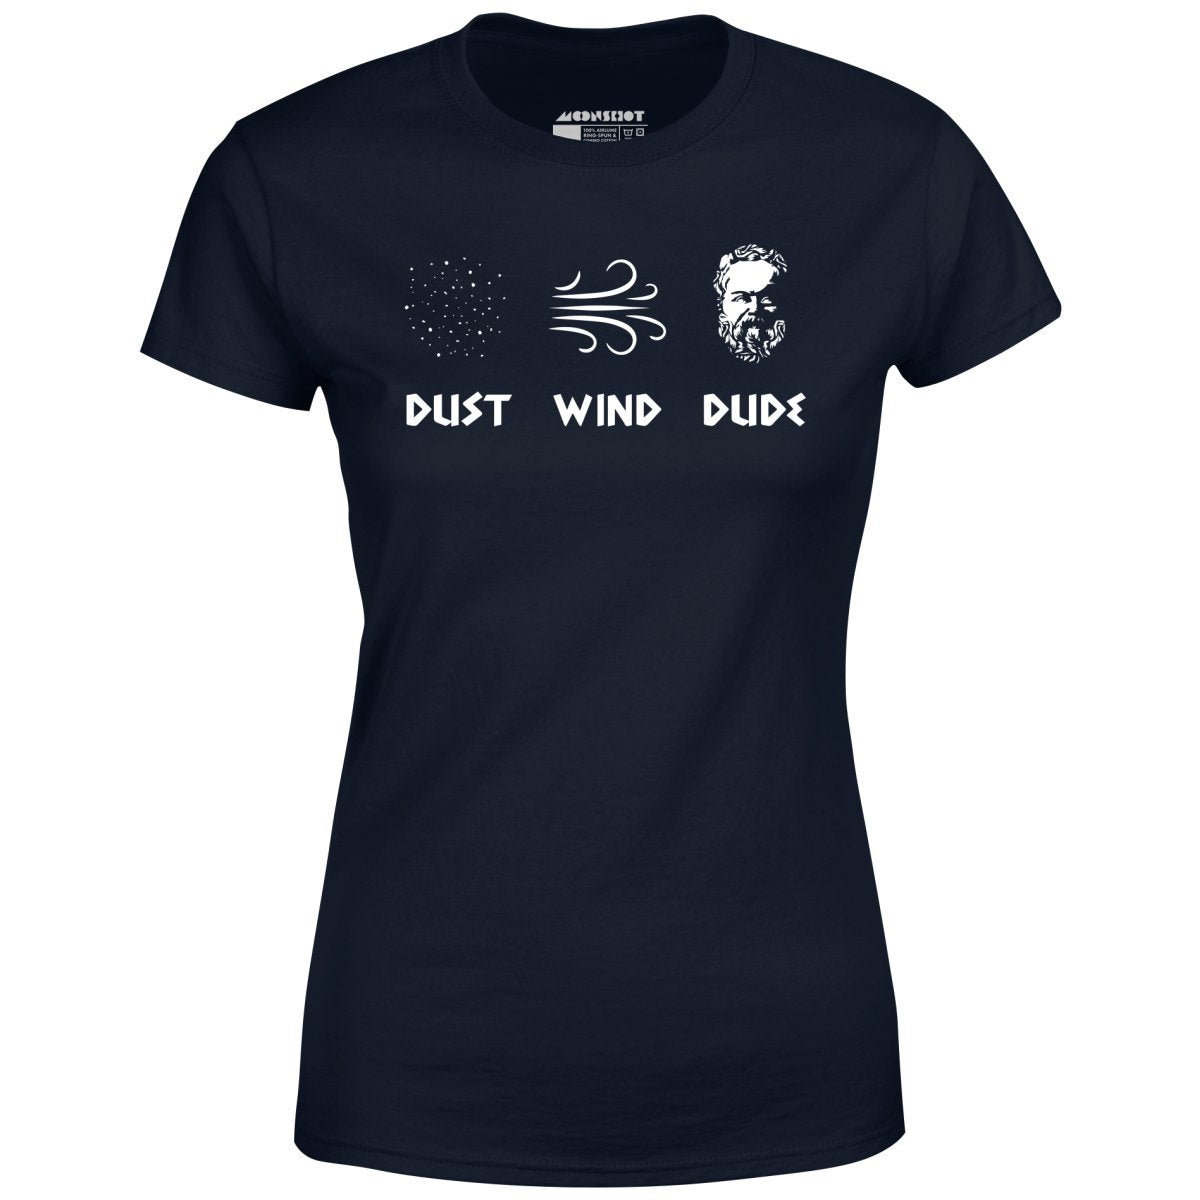 Socrates - Dust, Wind, Dude - Women's T-Shirt